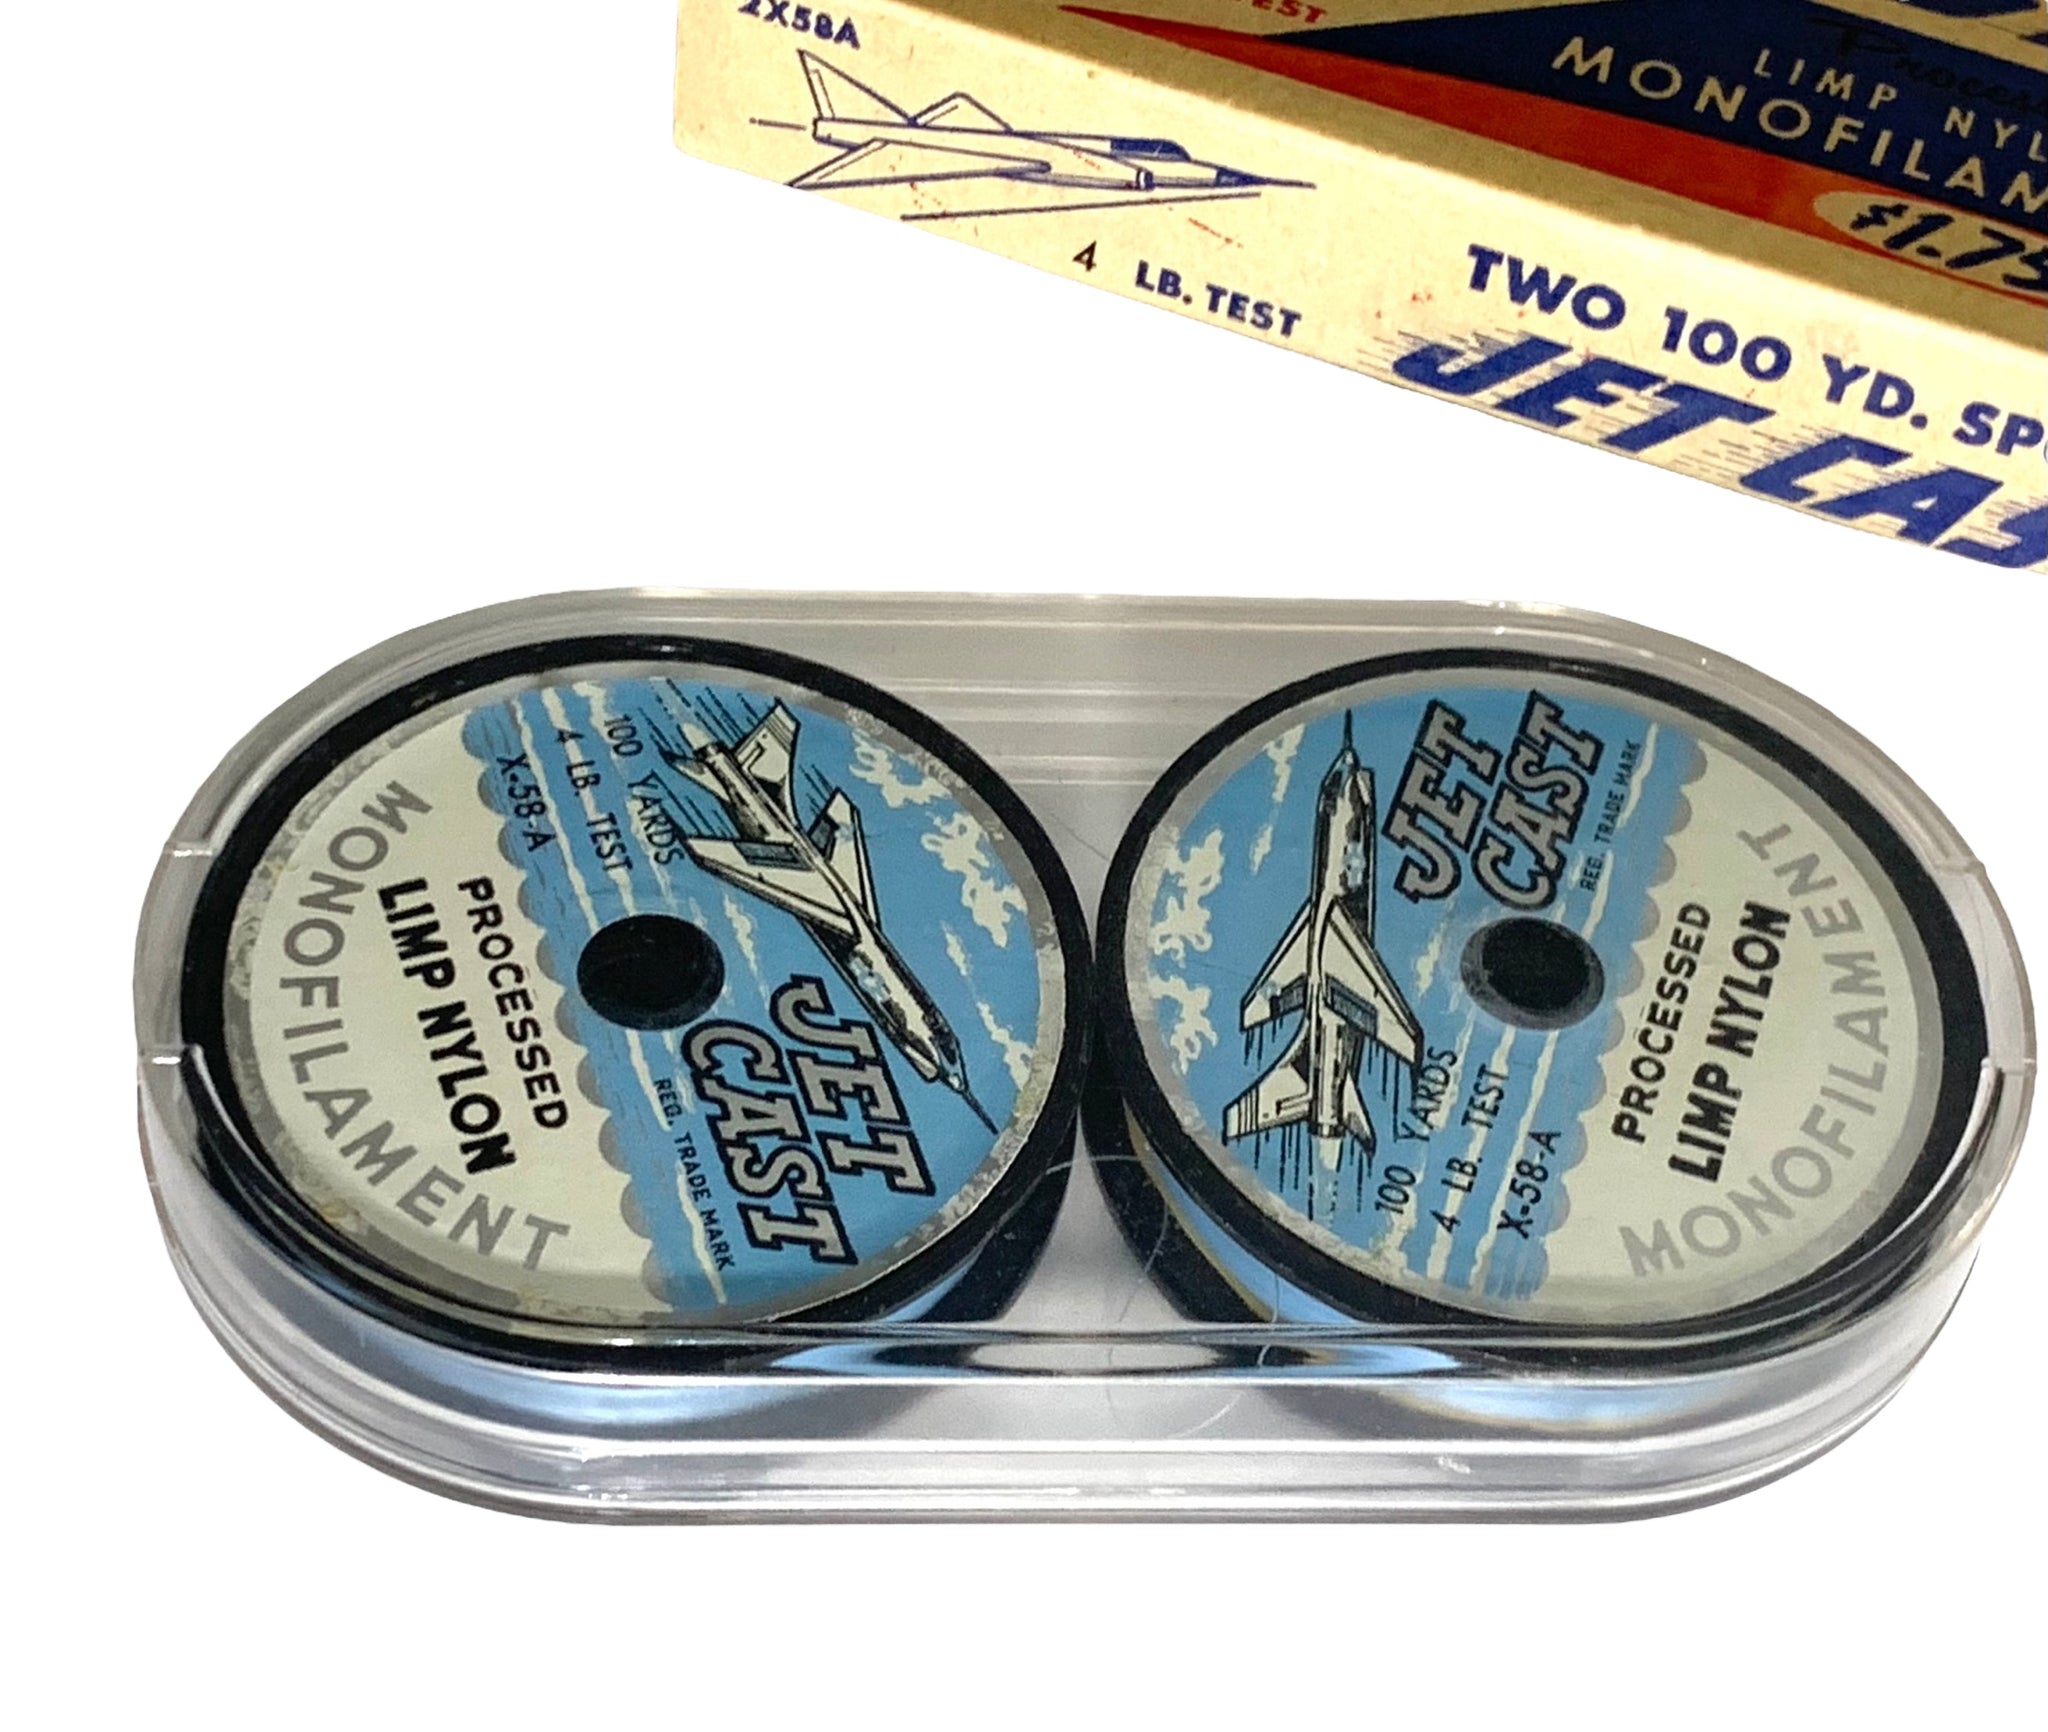 Vintage JET CAST 4 Lb Test Nylon Monofilament Fishing Line • Made